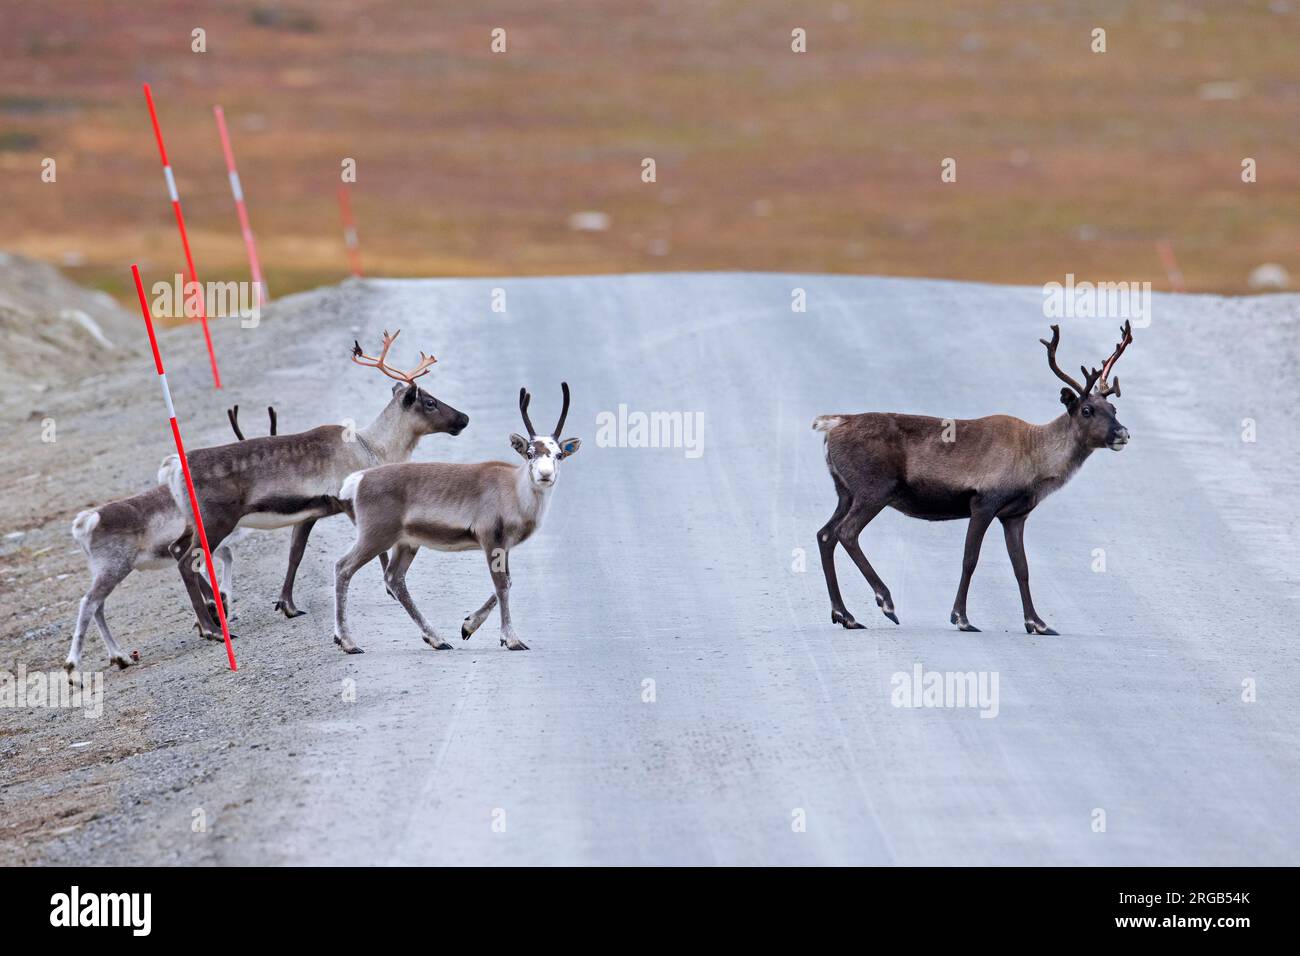 Reindeer (Rangifer tarandus) herd crossing dirt road in autumn / fall, Lapland, Sweden Stock Photo